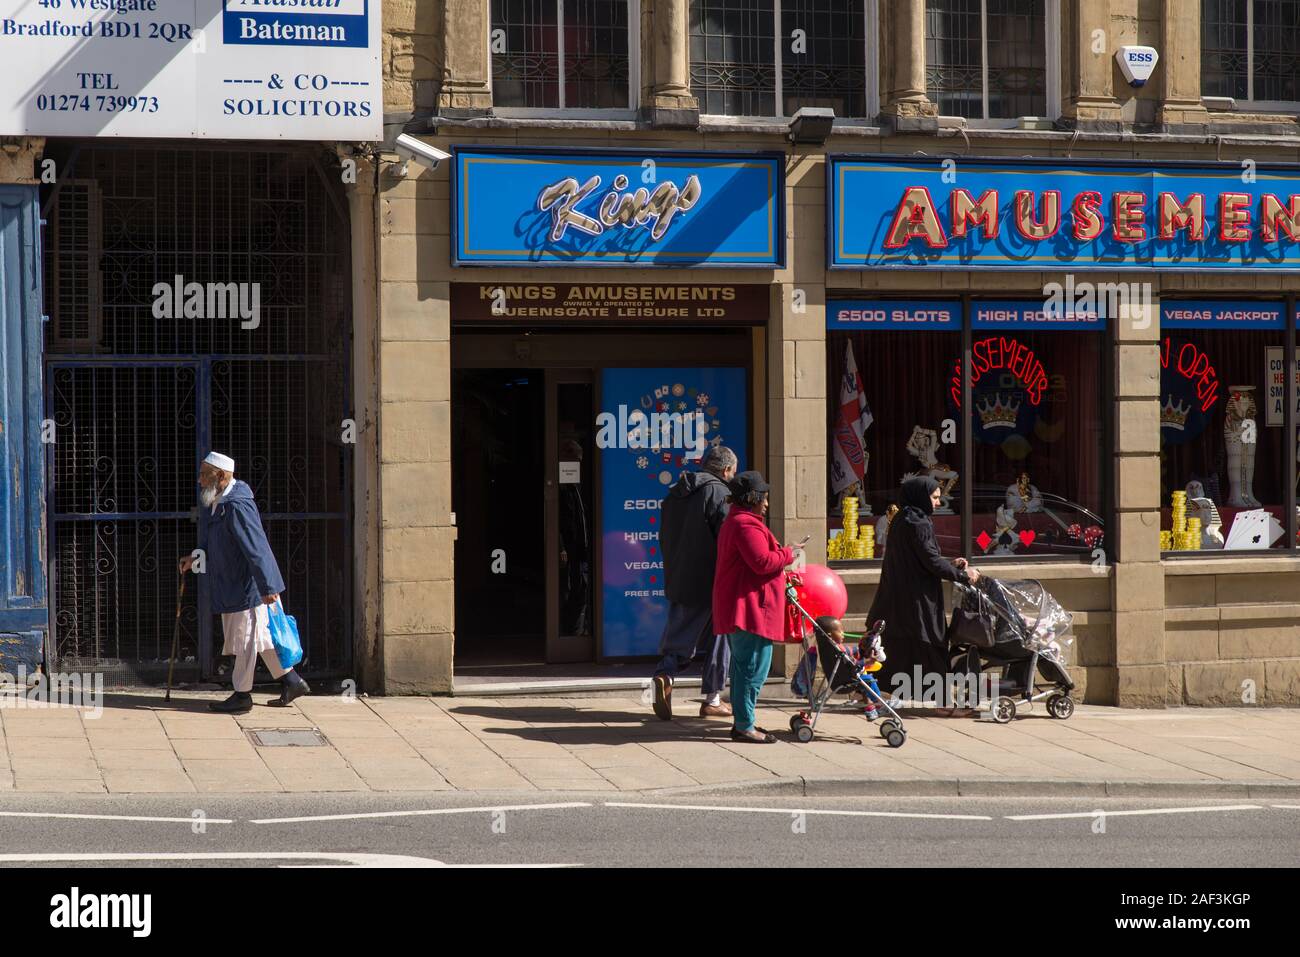 People of various origins in a street in Bradford, Yorkshire, Great Britain. Stock Photo